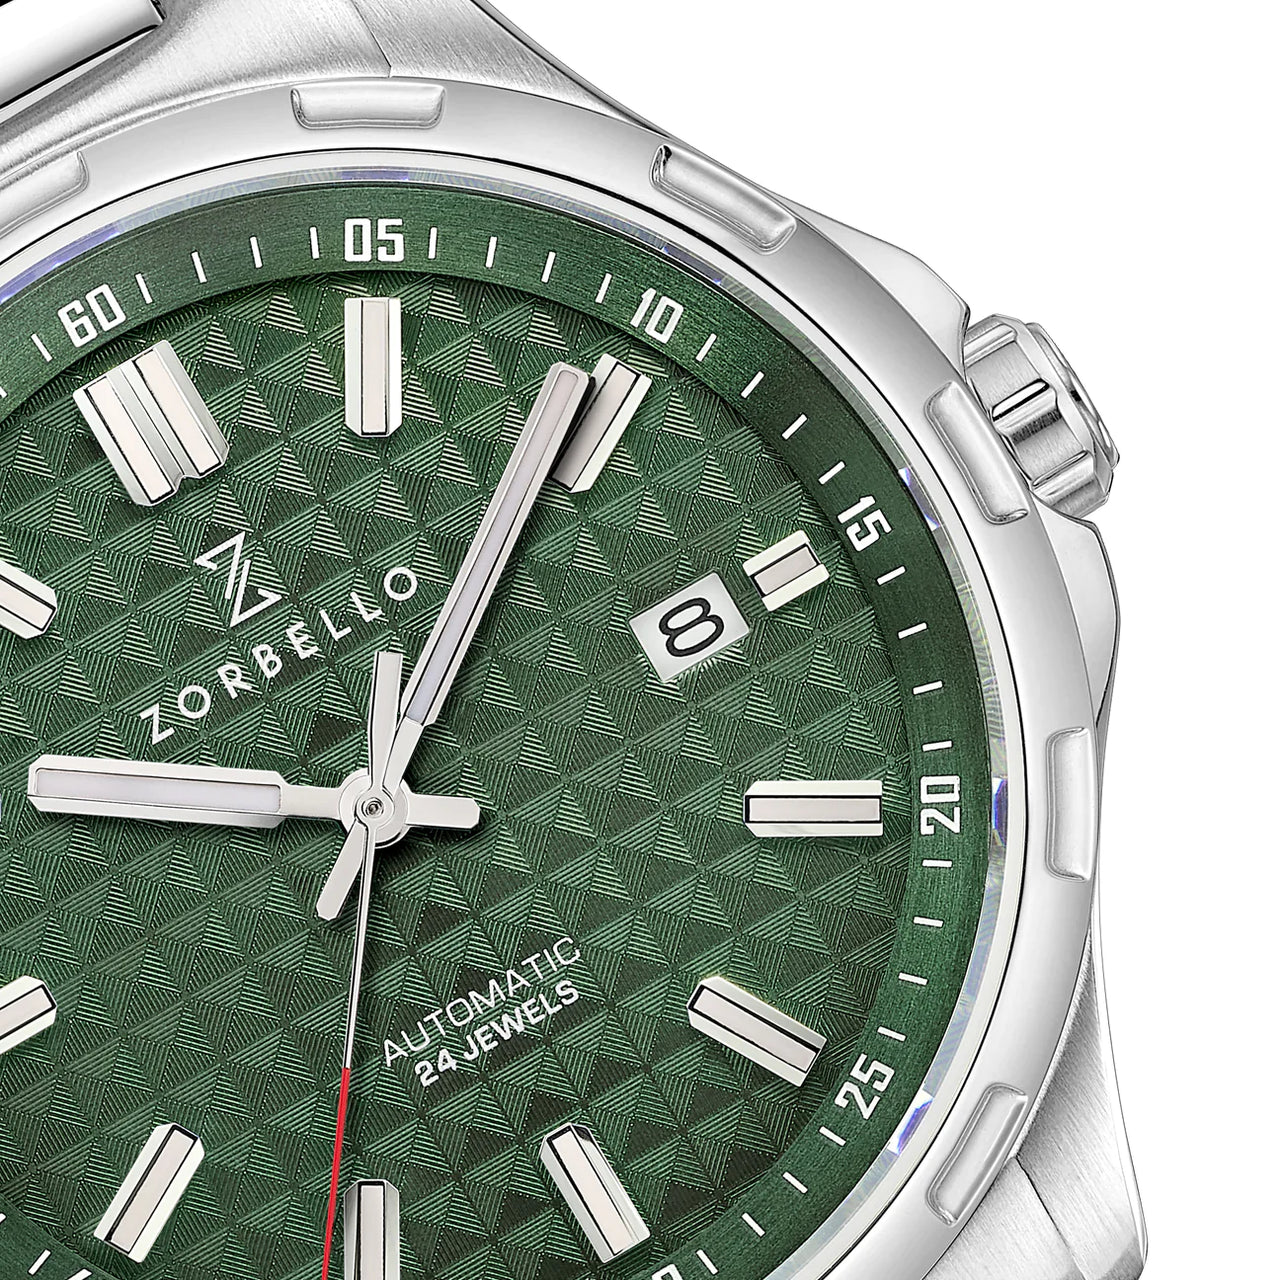 Zorbello Mechanical Watch M1 Series Green LumiNova® ZBAE005